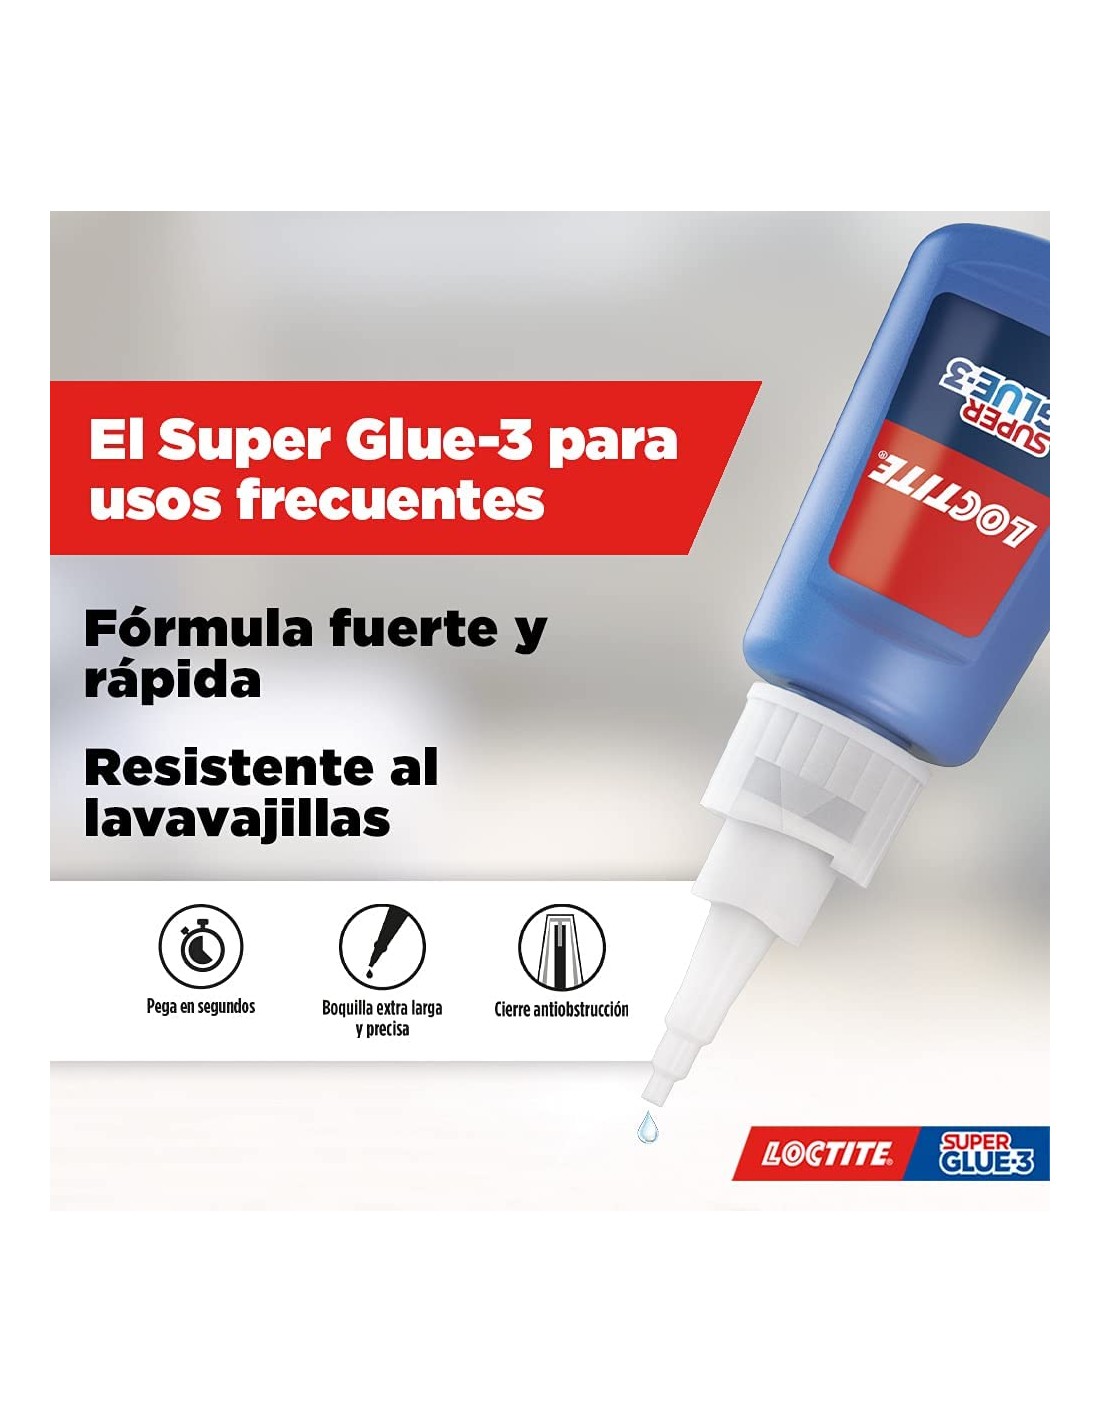 Loctite Super Glue-3 XXL 20g